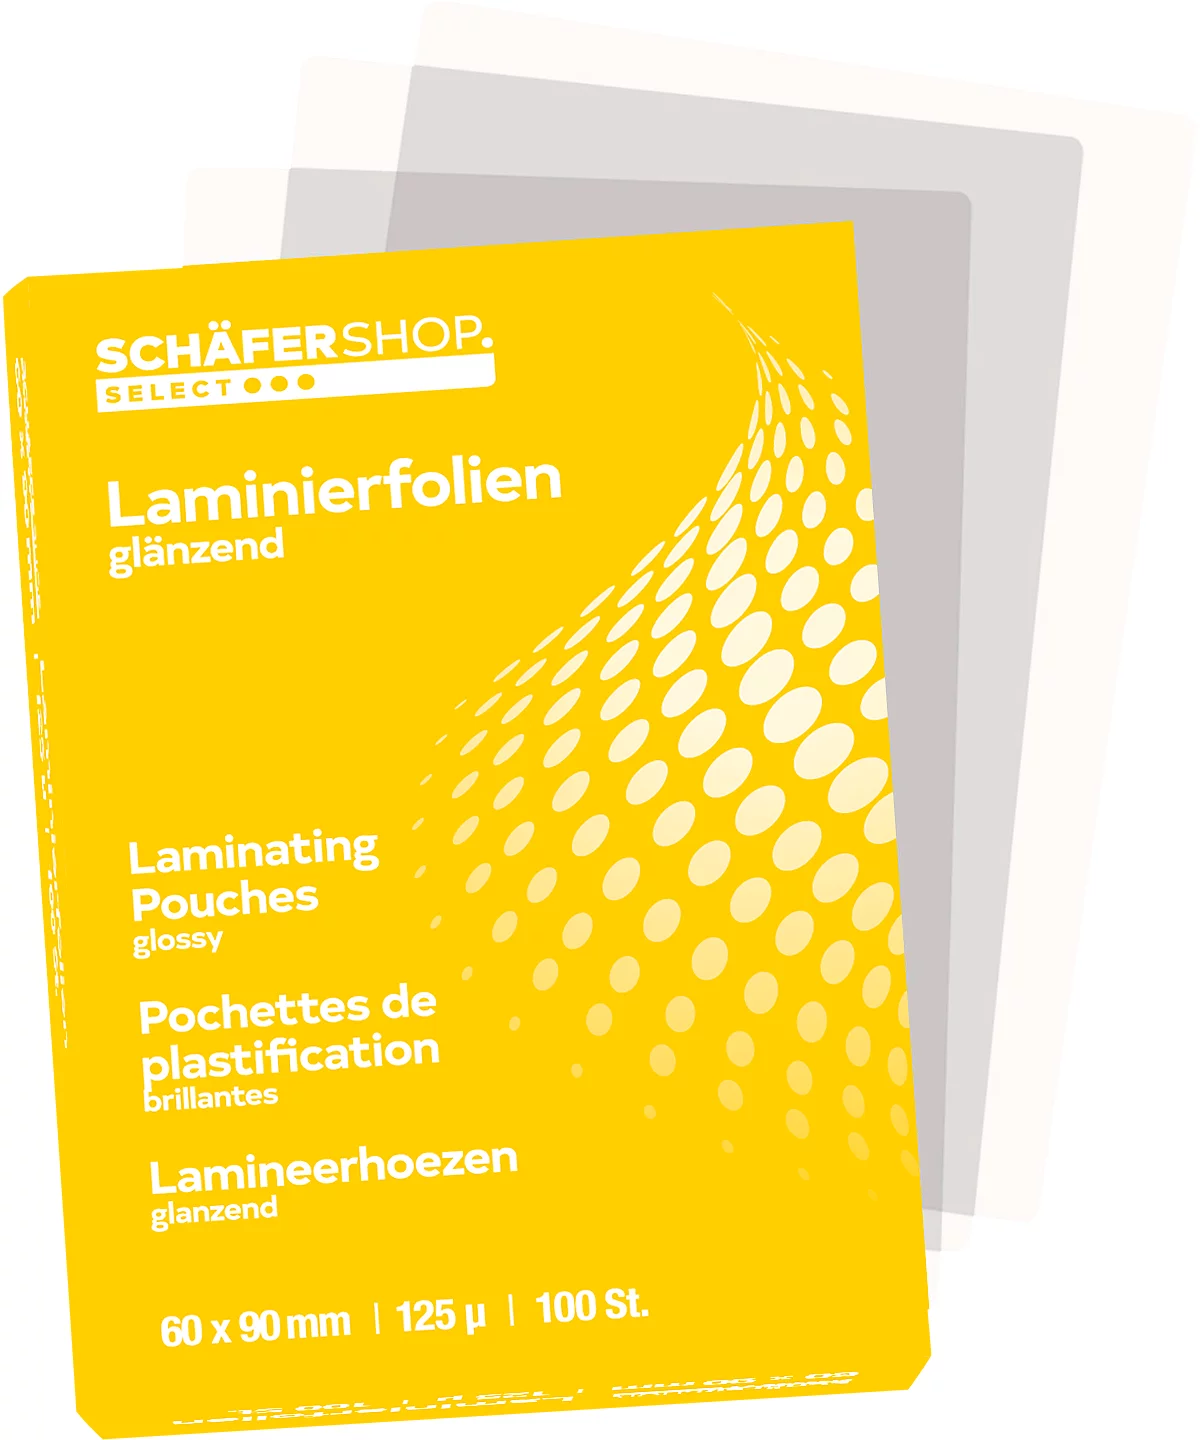 Schäfer Shop Select lamineerfolies, 60 x 90 mm, 125 micron, 100 stuks